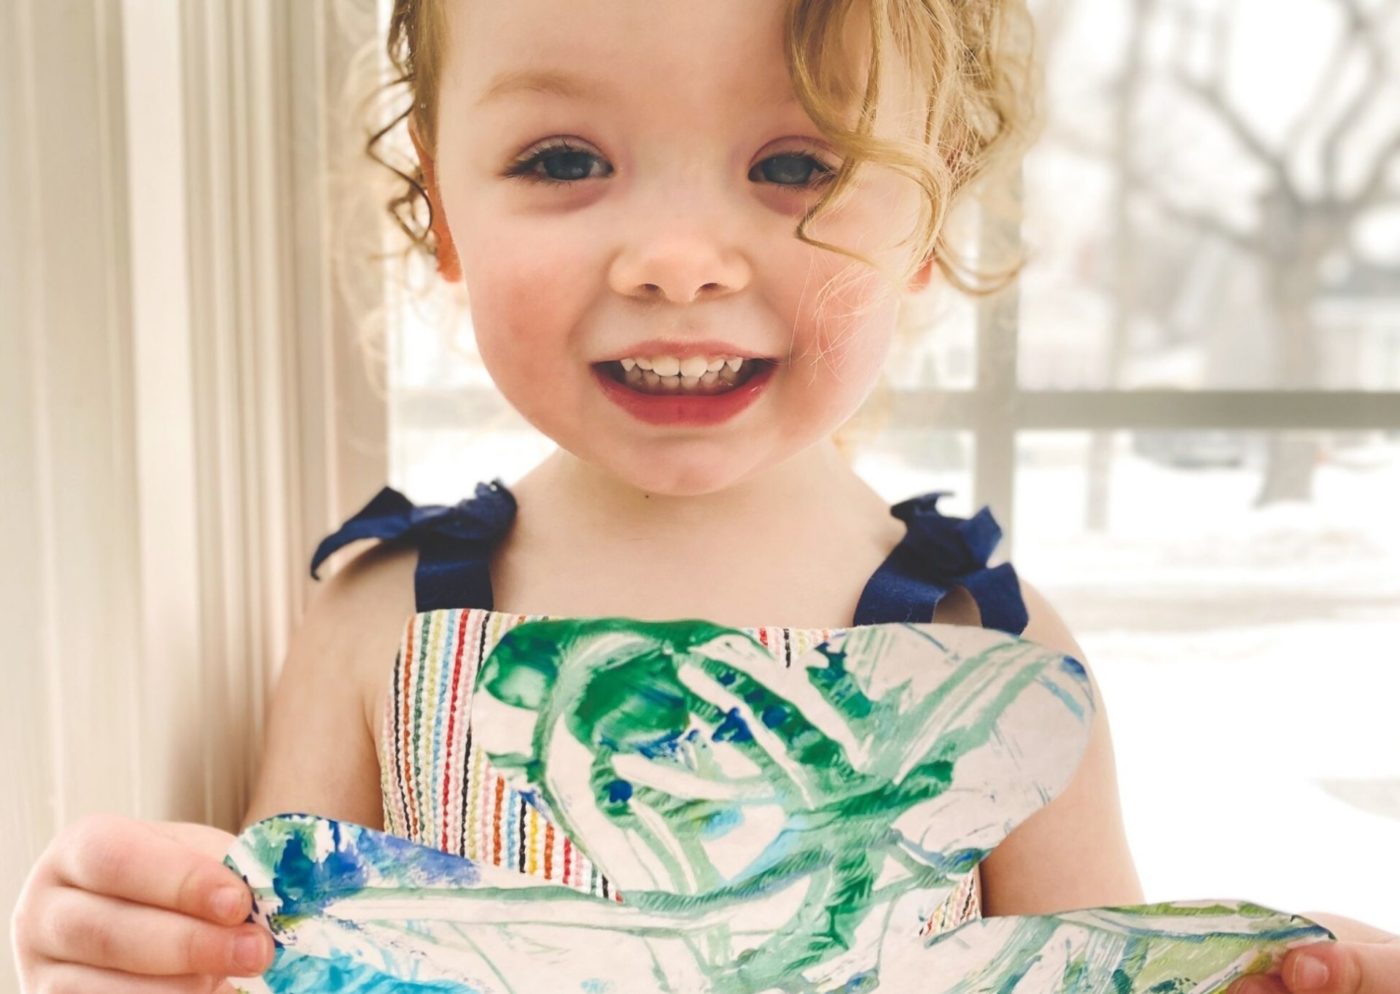 A child shows their artwork.